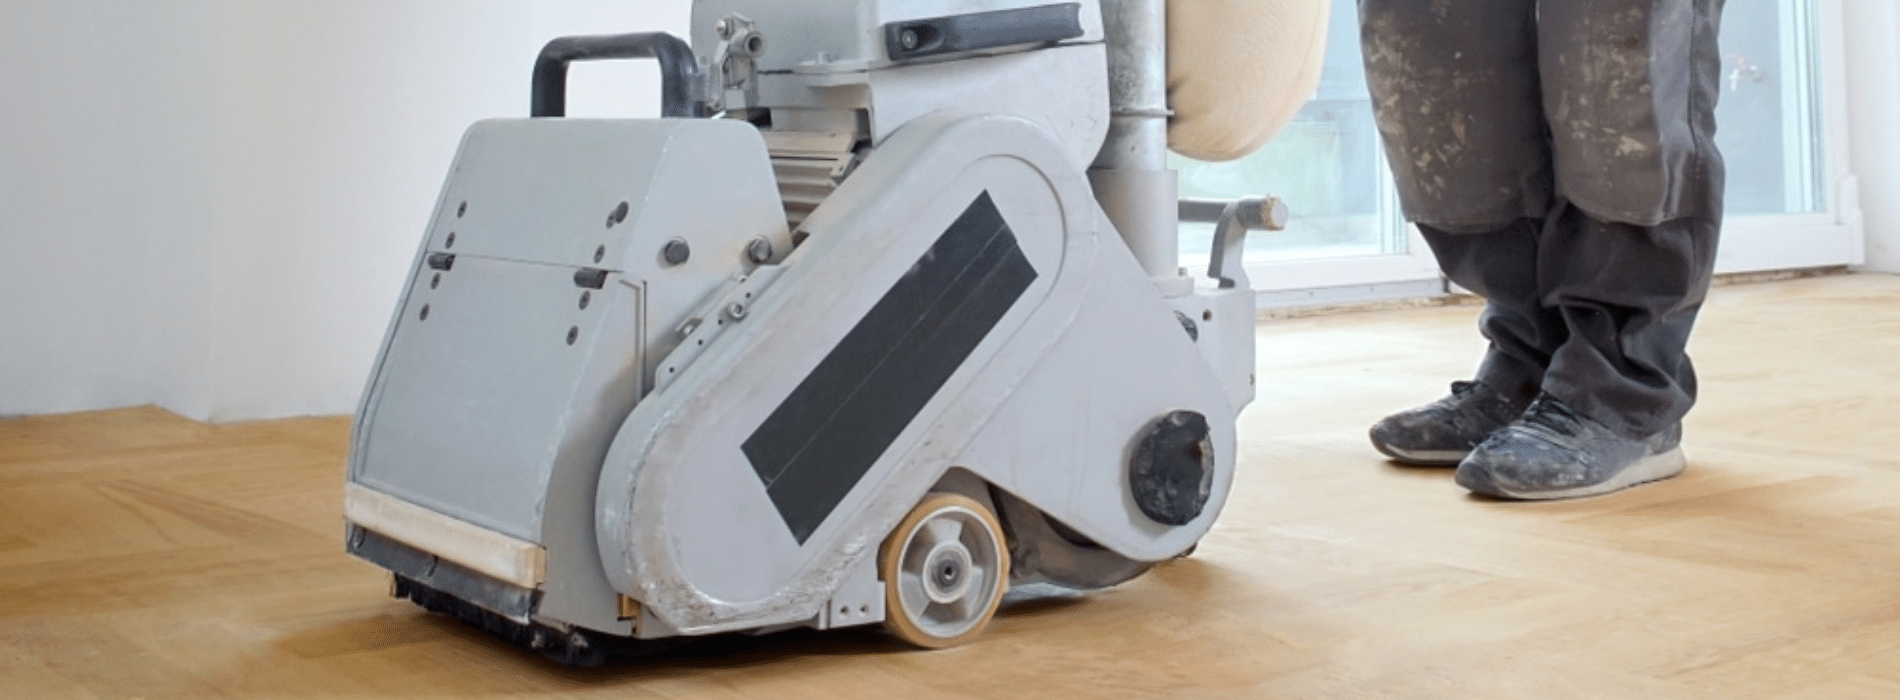 In Tilbury, RM18, Mr Sander® sanding parquet floor with Bona Belt Lite (2.2kW, 230V, 50Hz). Size: 200x750mm belt sander connected to HEPA-filtered dust extraction system for clean, efficient results.